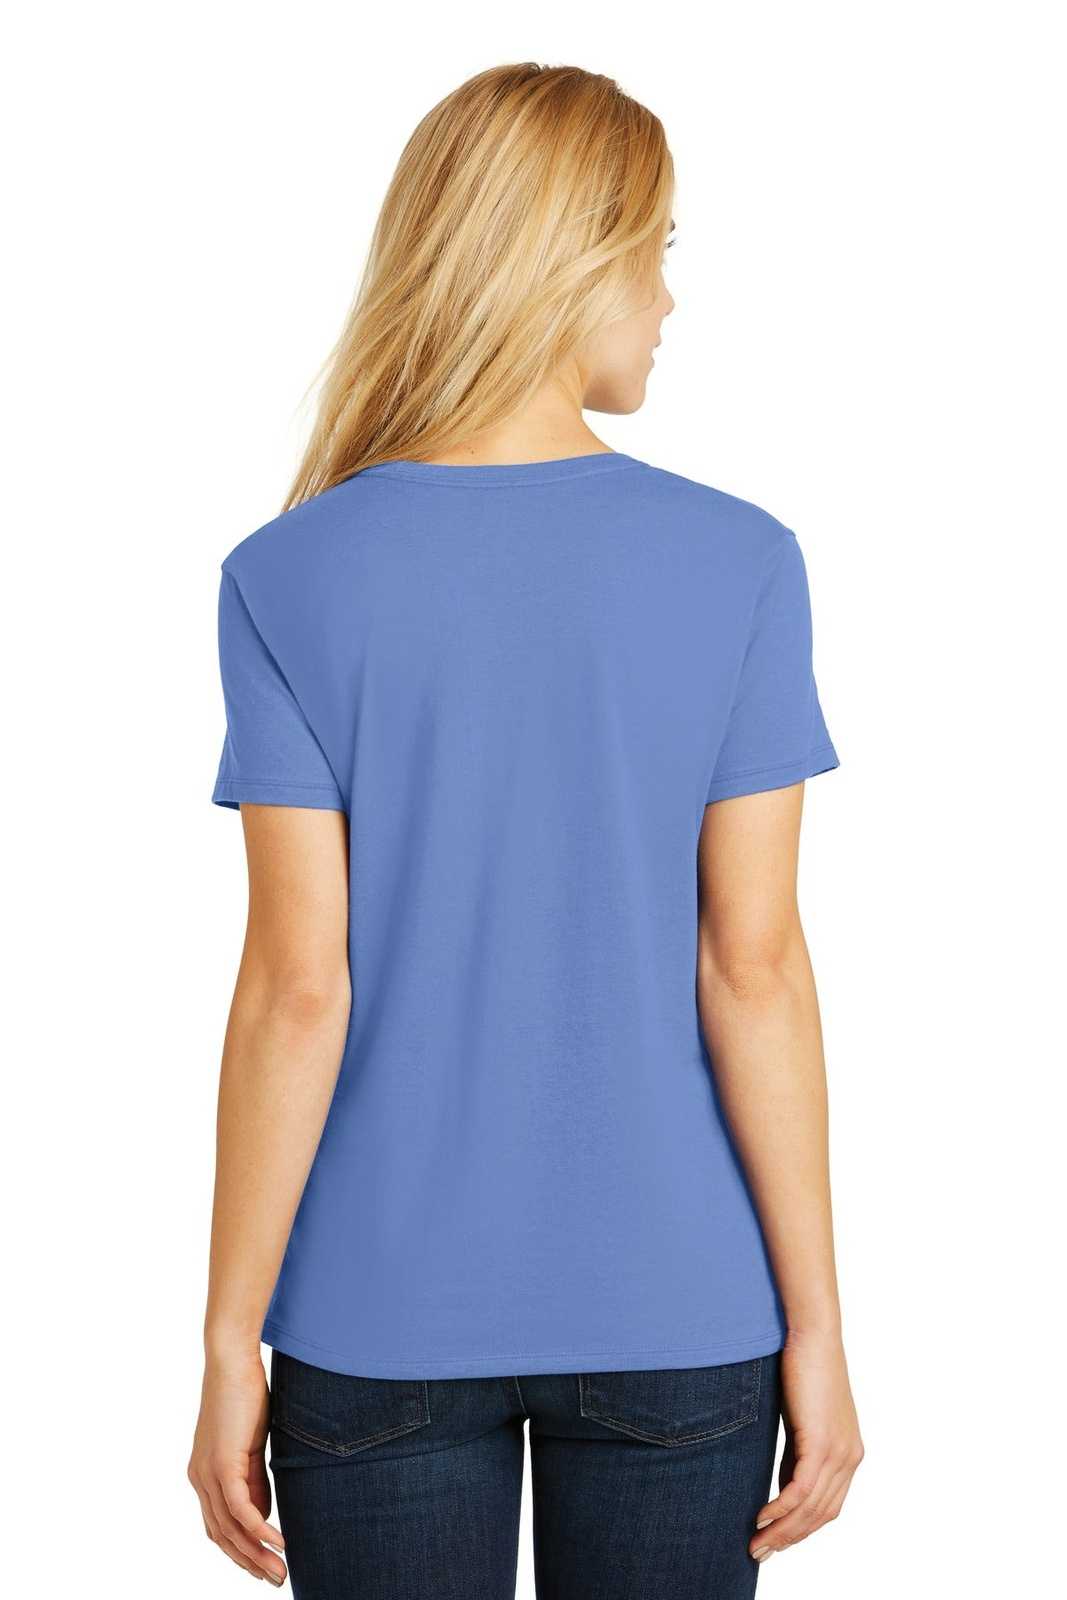 Hanes SL04 Ladies Nano-T Cotton T-Shirt - Carolina Blue - HIT a Double